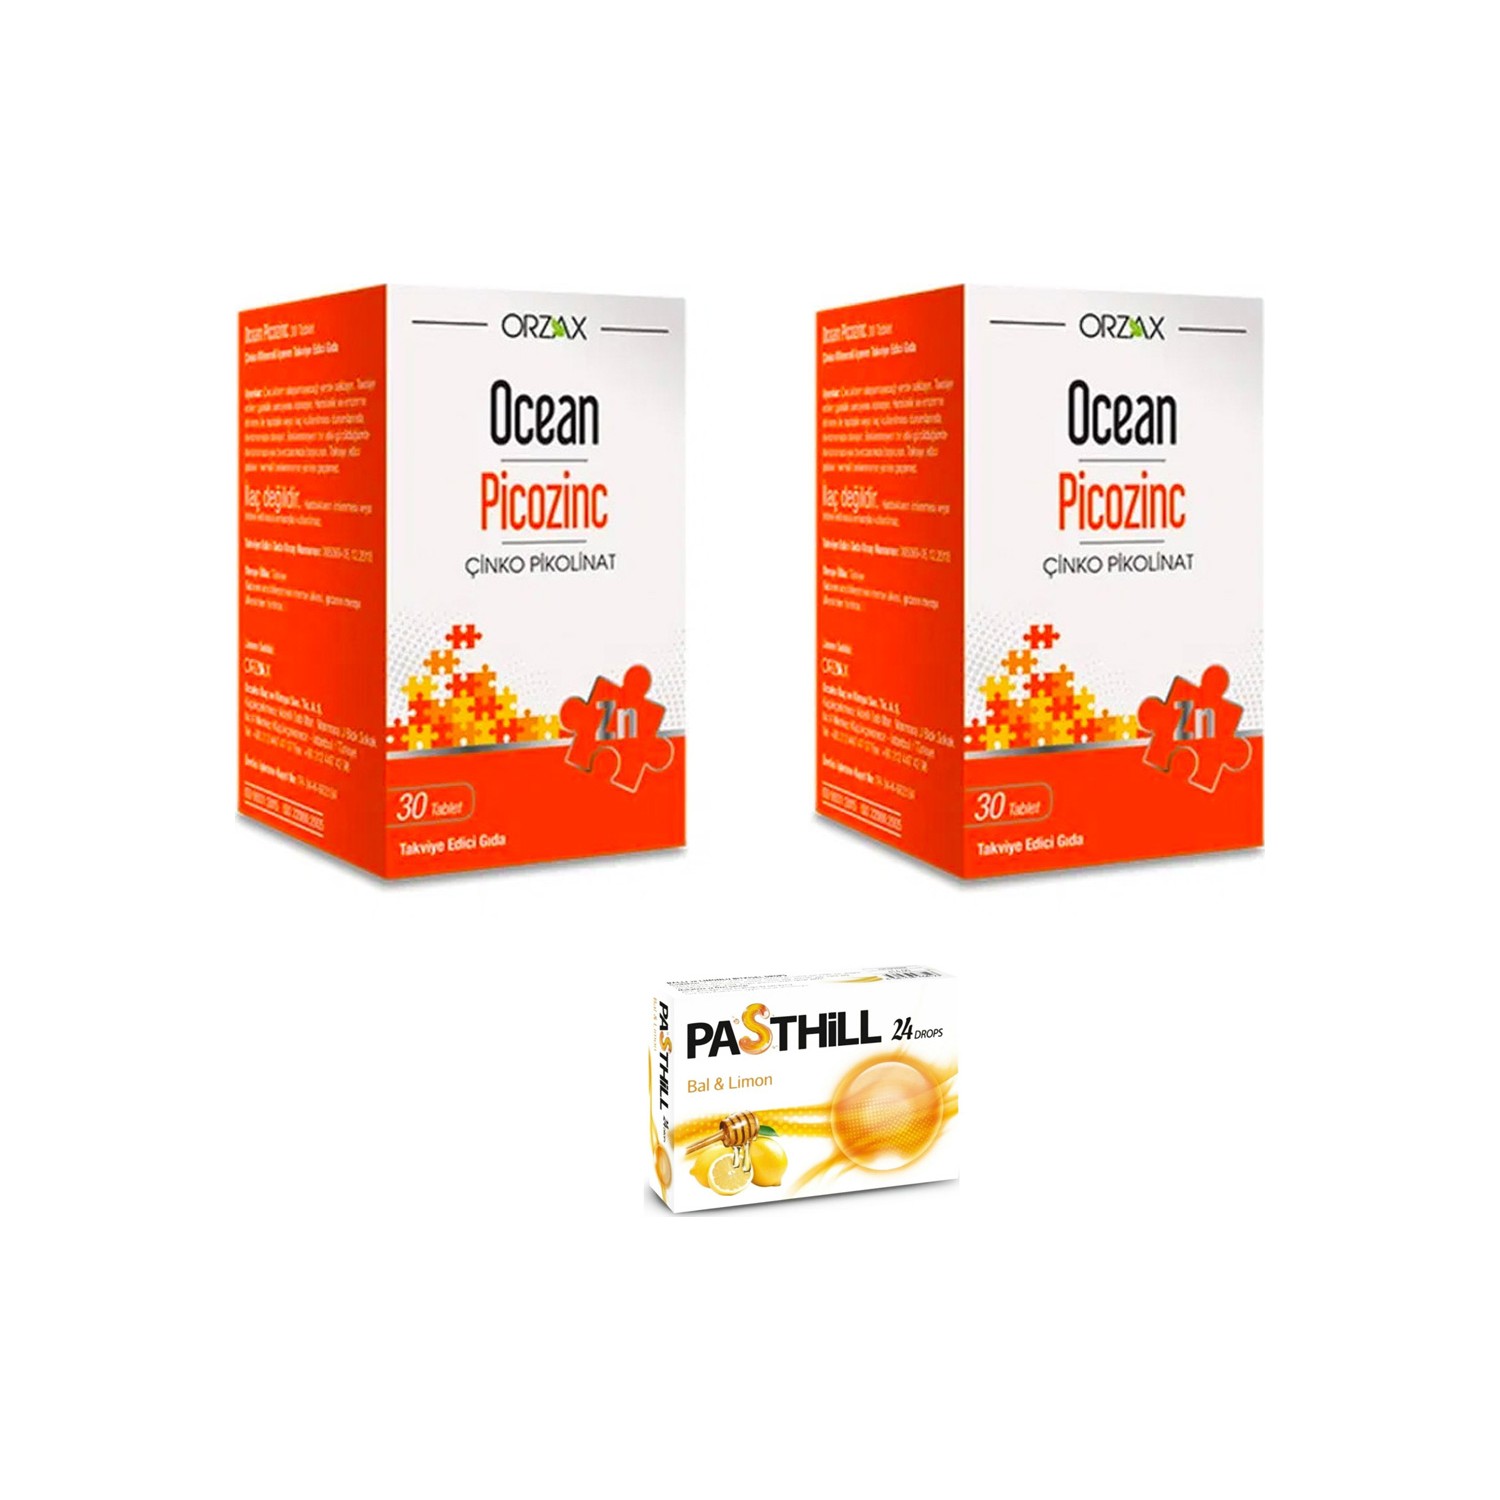 Пищевая добавка Orzax Ocean Picozinc Cinko Picolinate, 2 упаковки по 30 таблеток + Пастилки Pasthill со вкусом меда и лимона биологически активная добавка solgar zinc picolinate 22 mg 100 шт